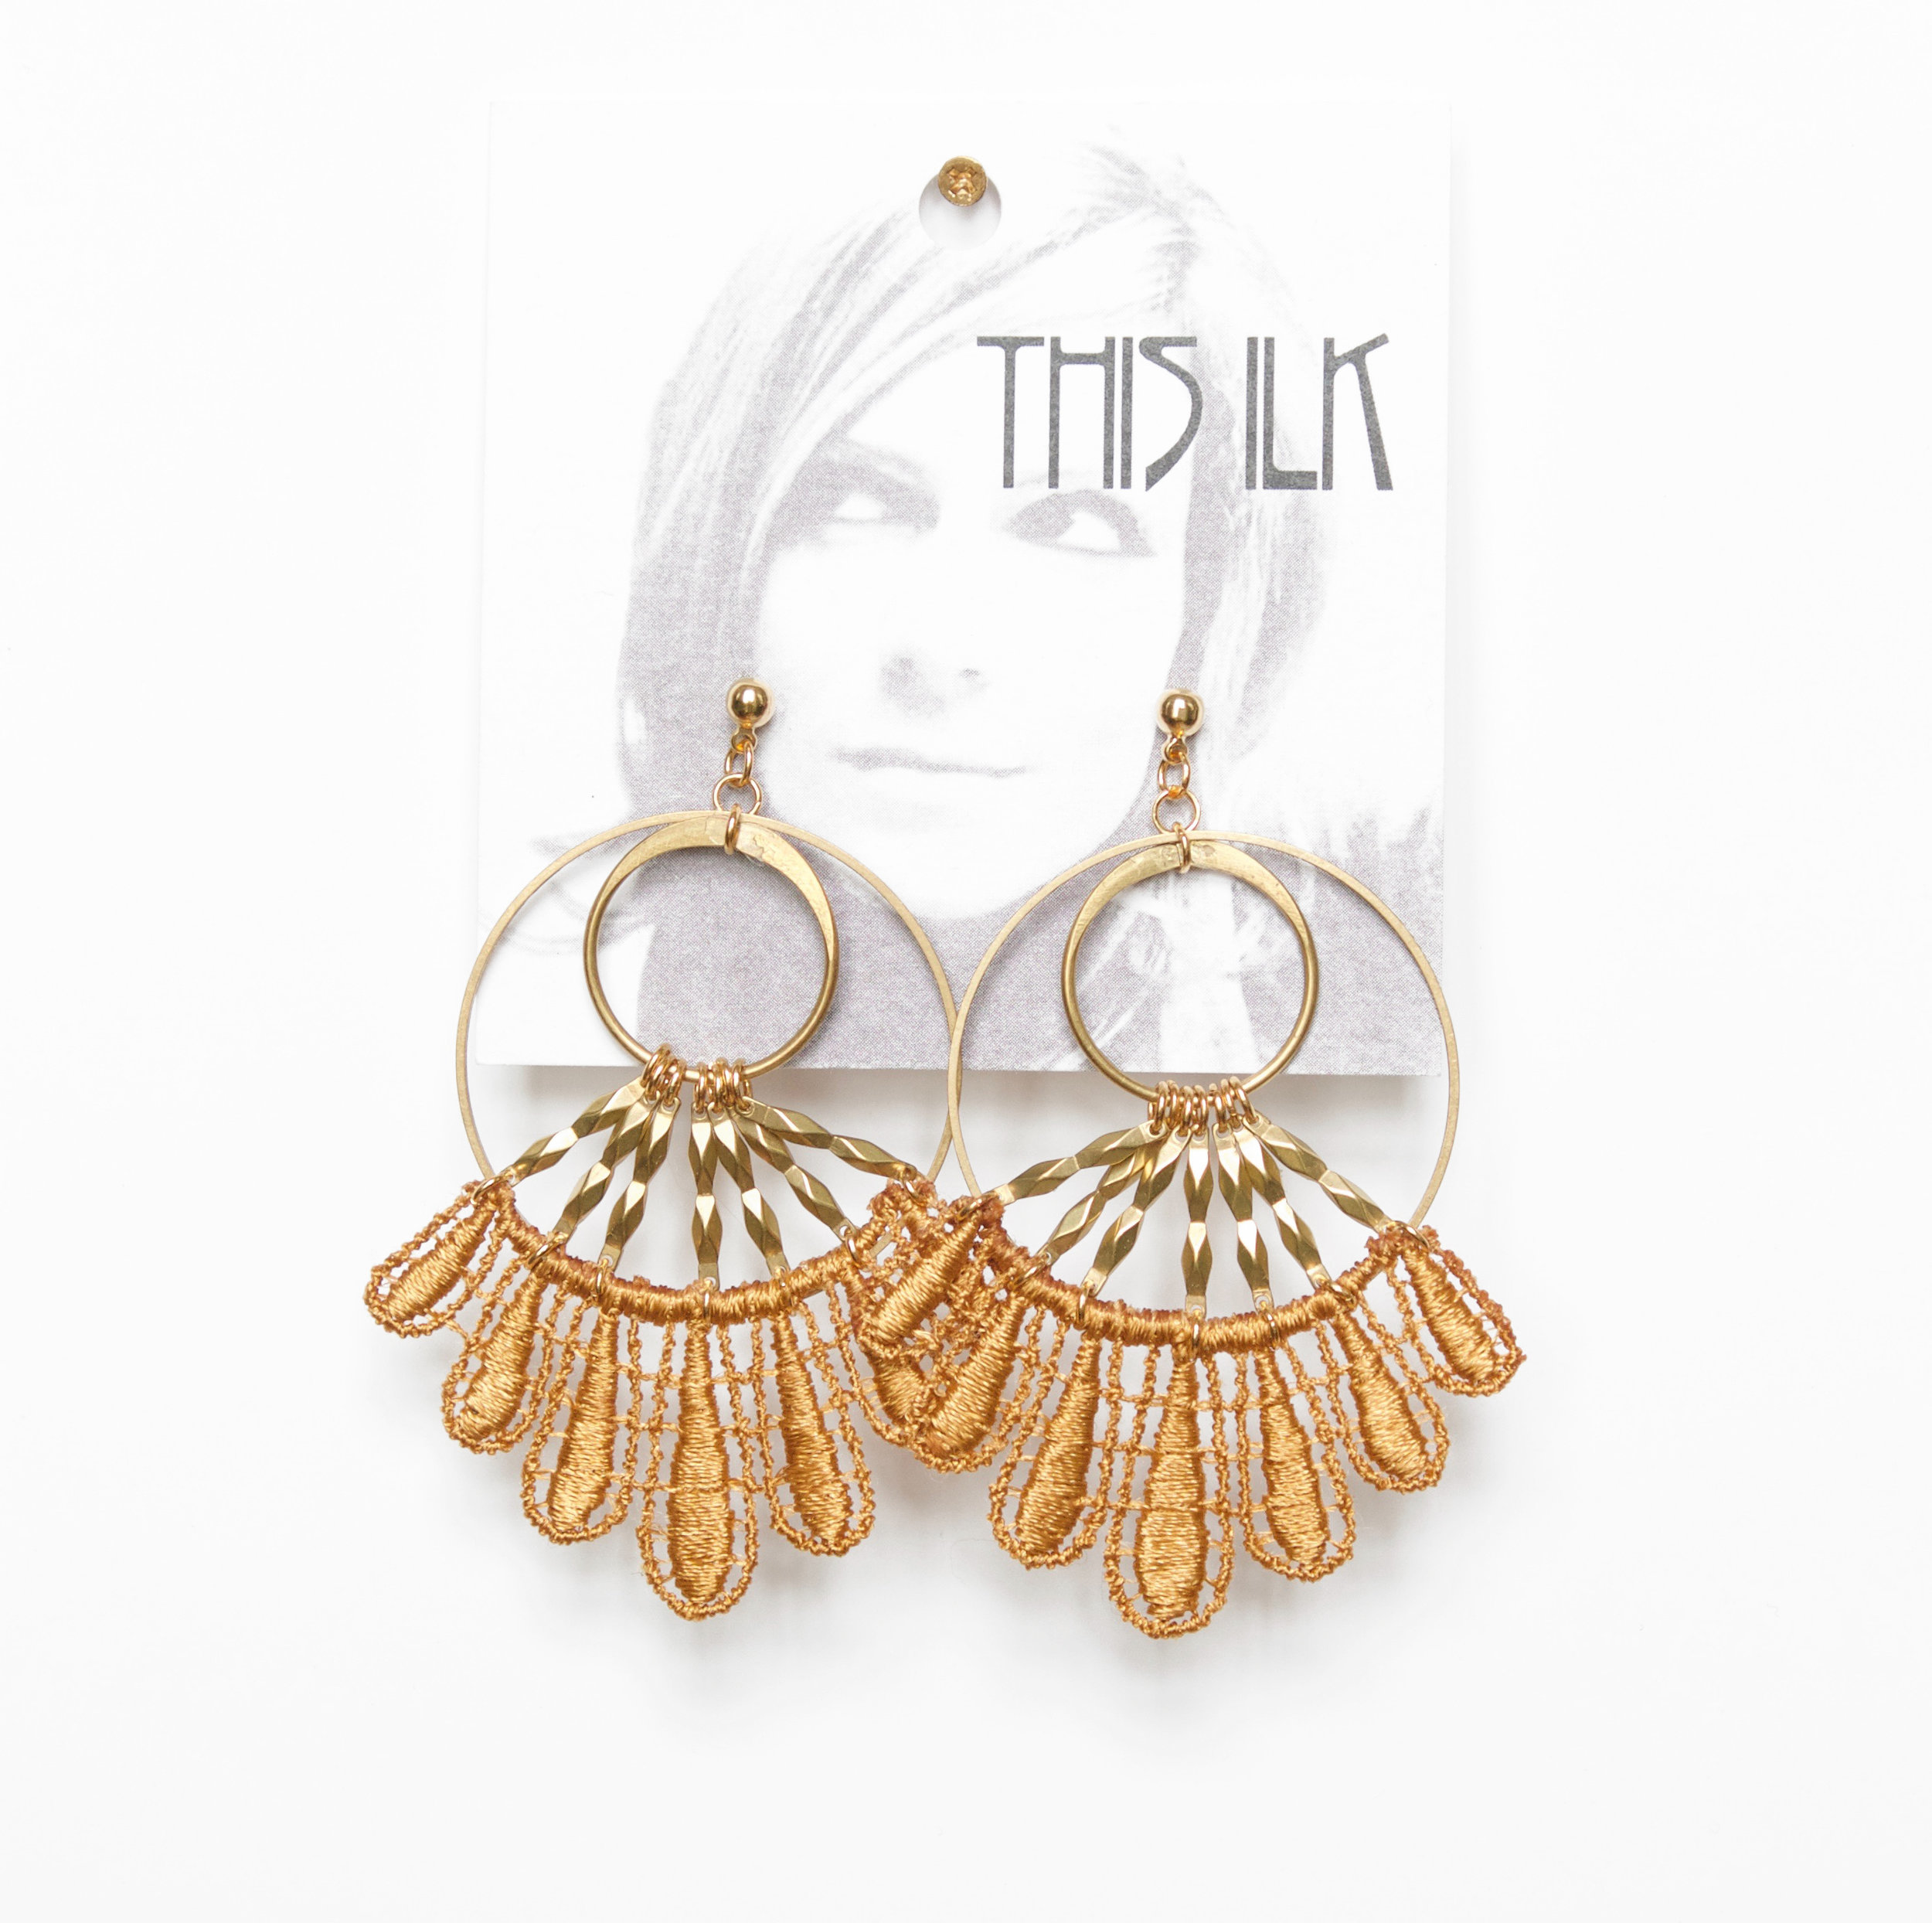 Chandu earrings — This Ilk - Vintage lace statement jewelry